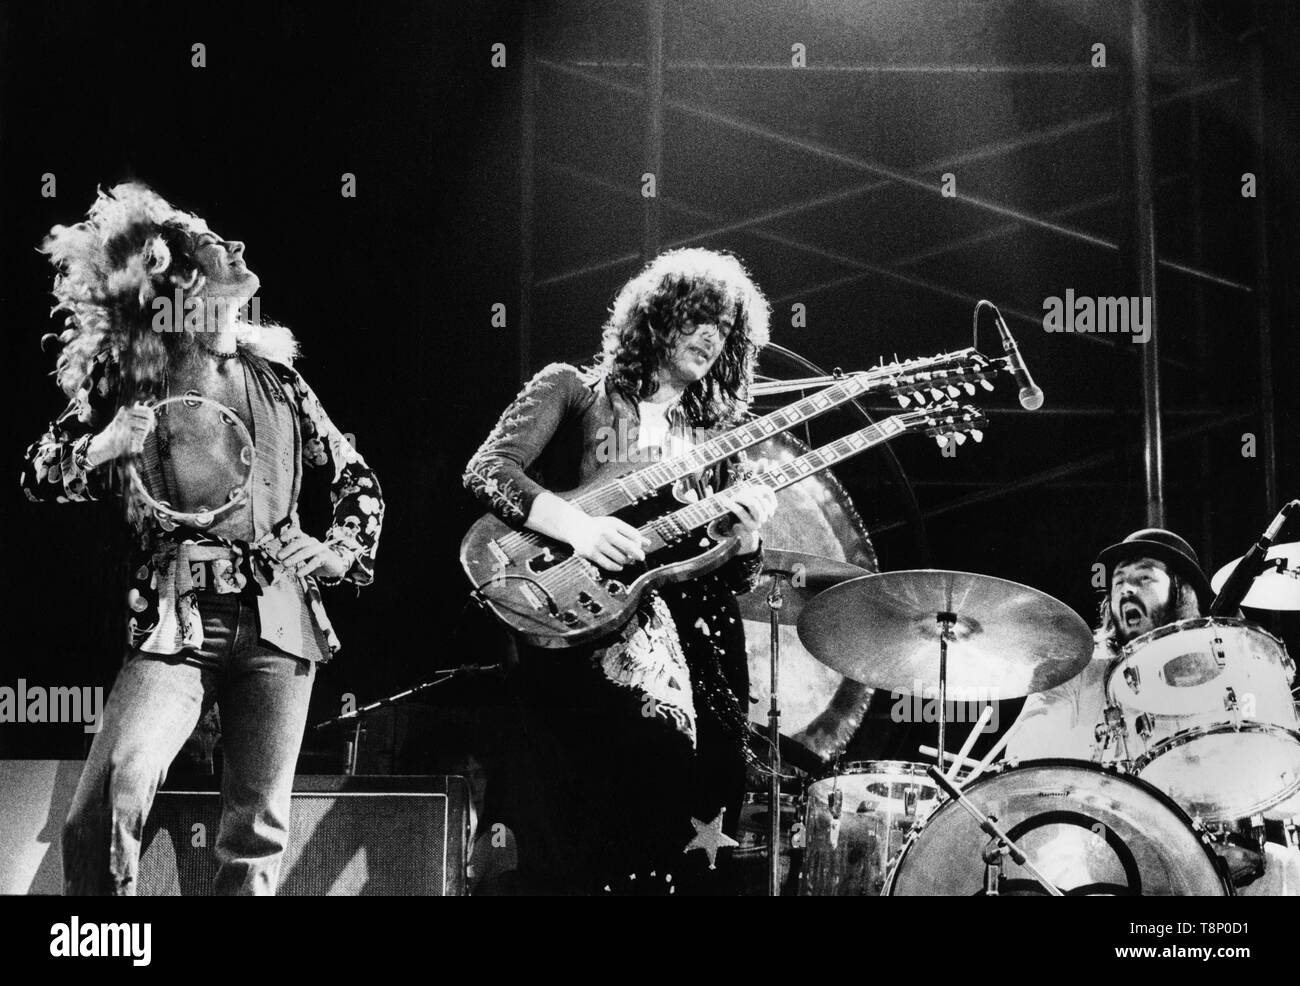 Germania - marzo: Led Zeppelin esibirsi dal vivo sul palco in Germania nel marzo 1973 L-R Robert Plant, Jimmy Page, John Bonham (foto di Gijsbert Hanekroot) Foto Stock